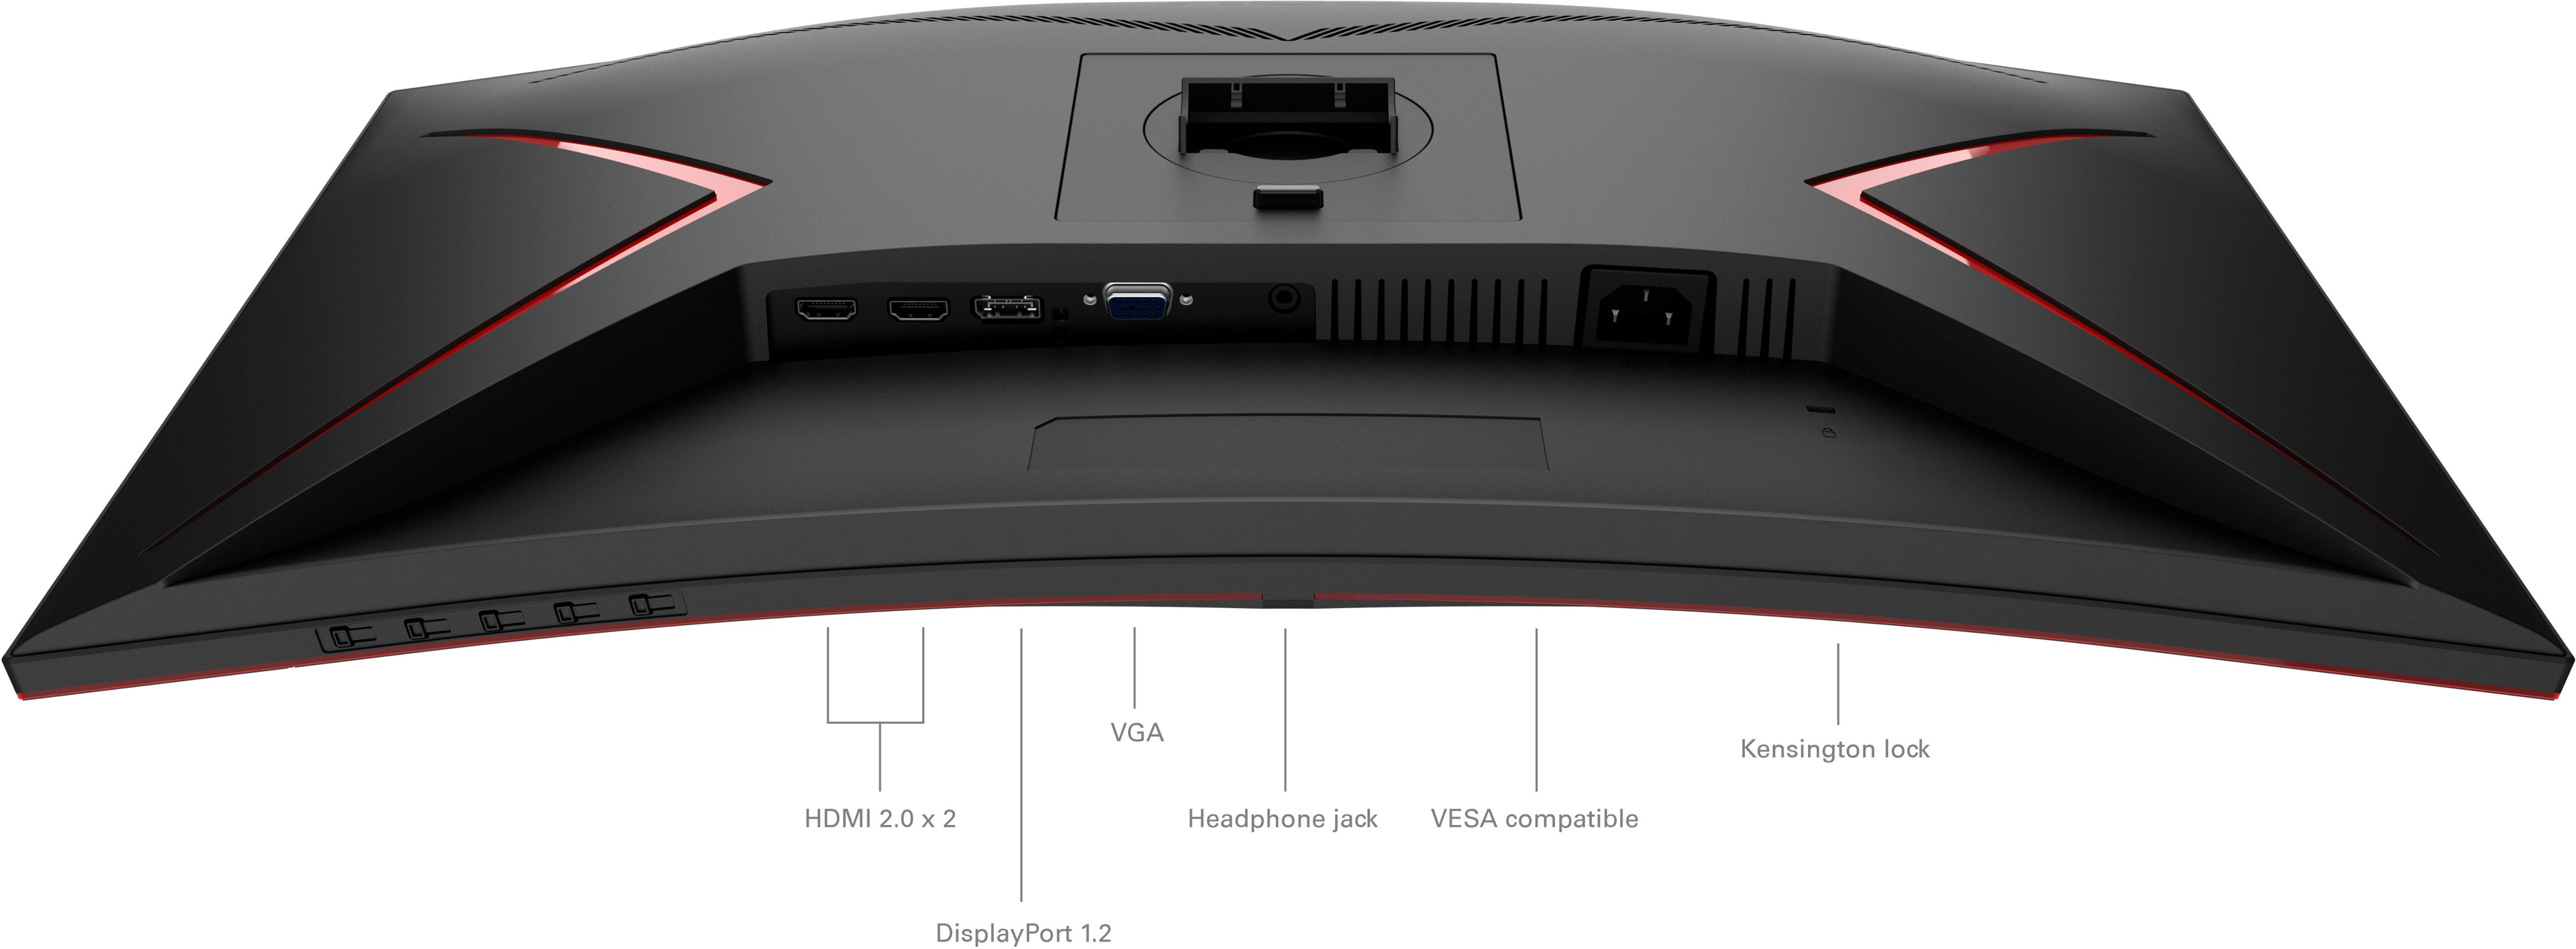 Aoc G2 Series C27g2 27 Led Curved Fhd Freesync Premium Monitor Displayport Hdmi Vga Black Red C27g2 Best Buy